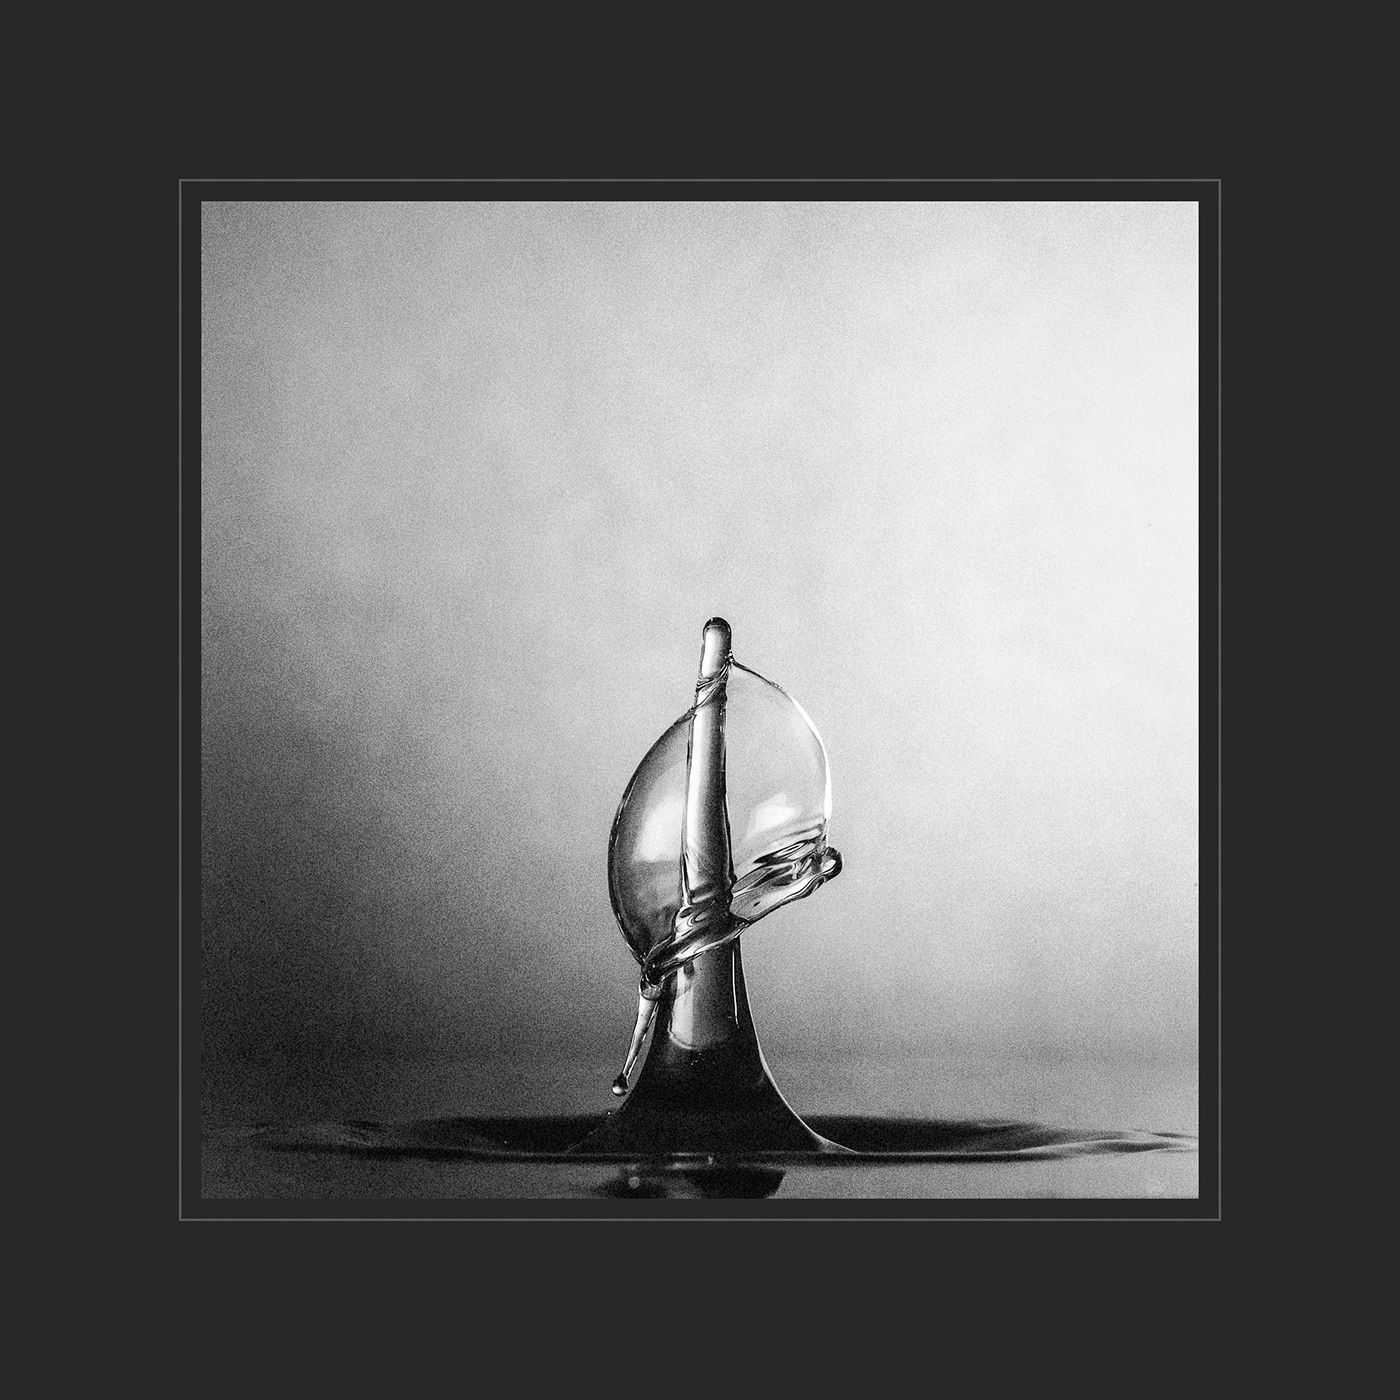 High Speed Still abstract water drop sculpture droplet splash